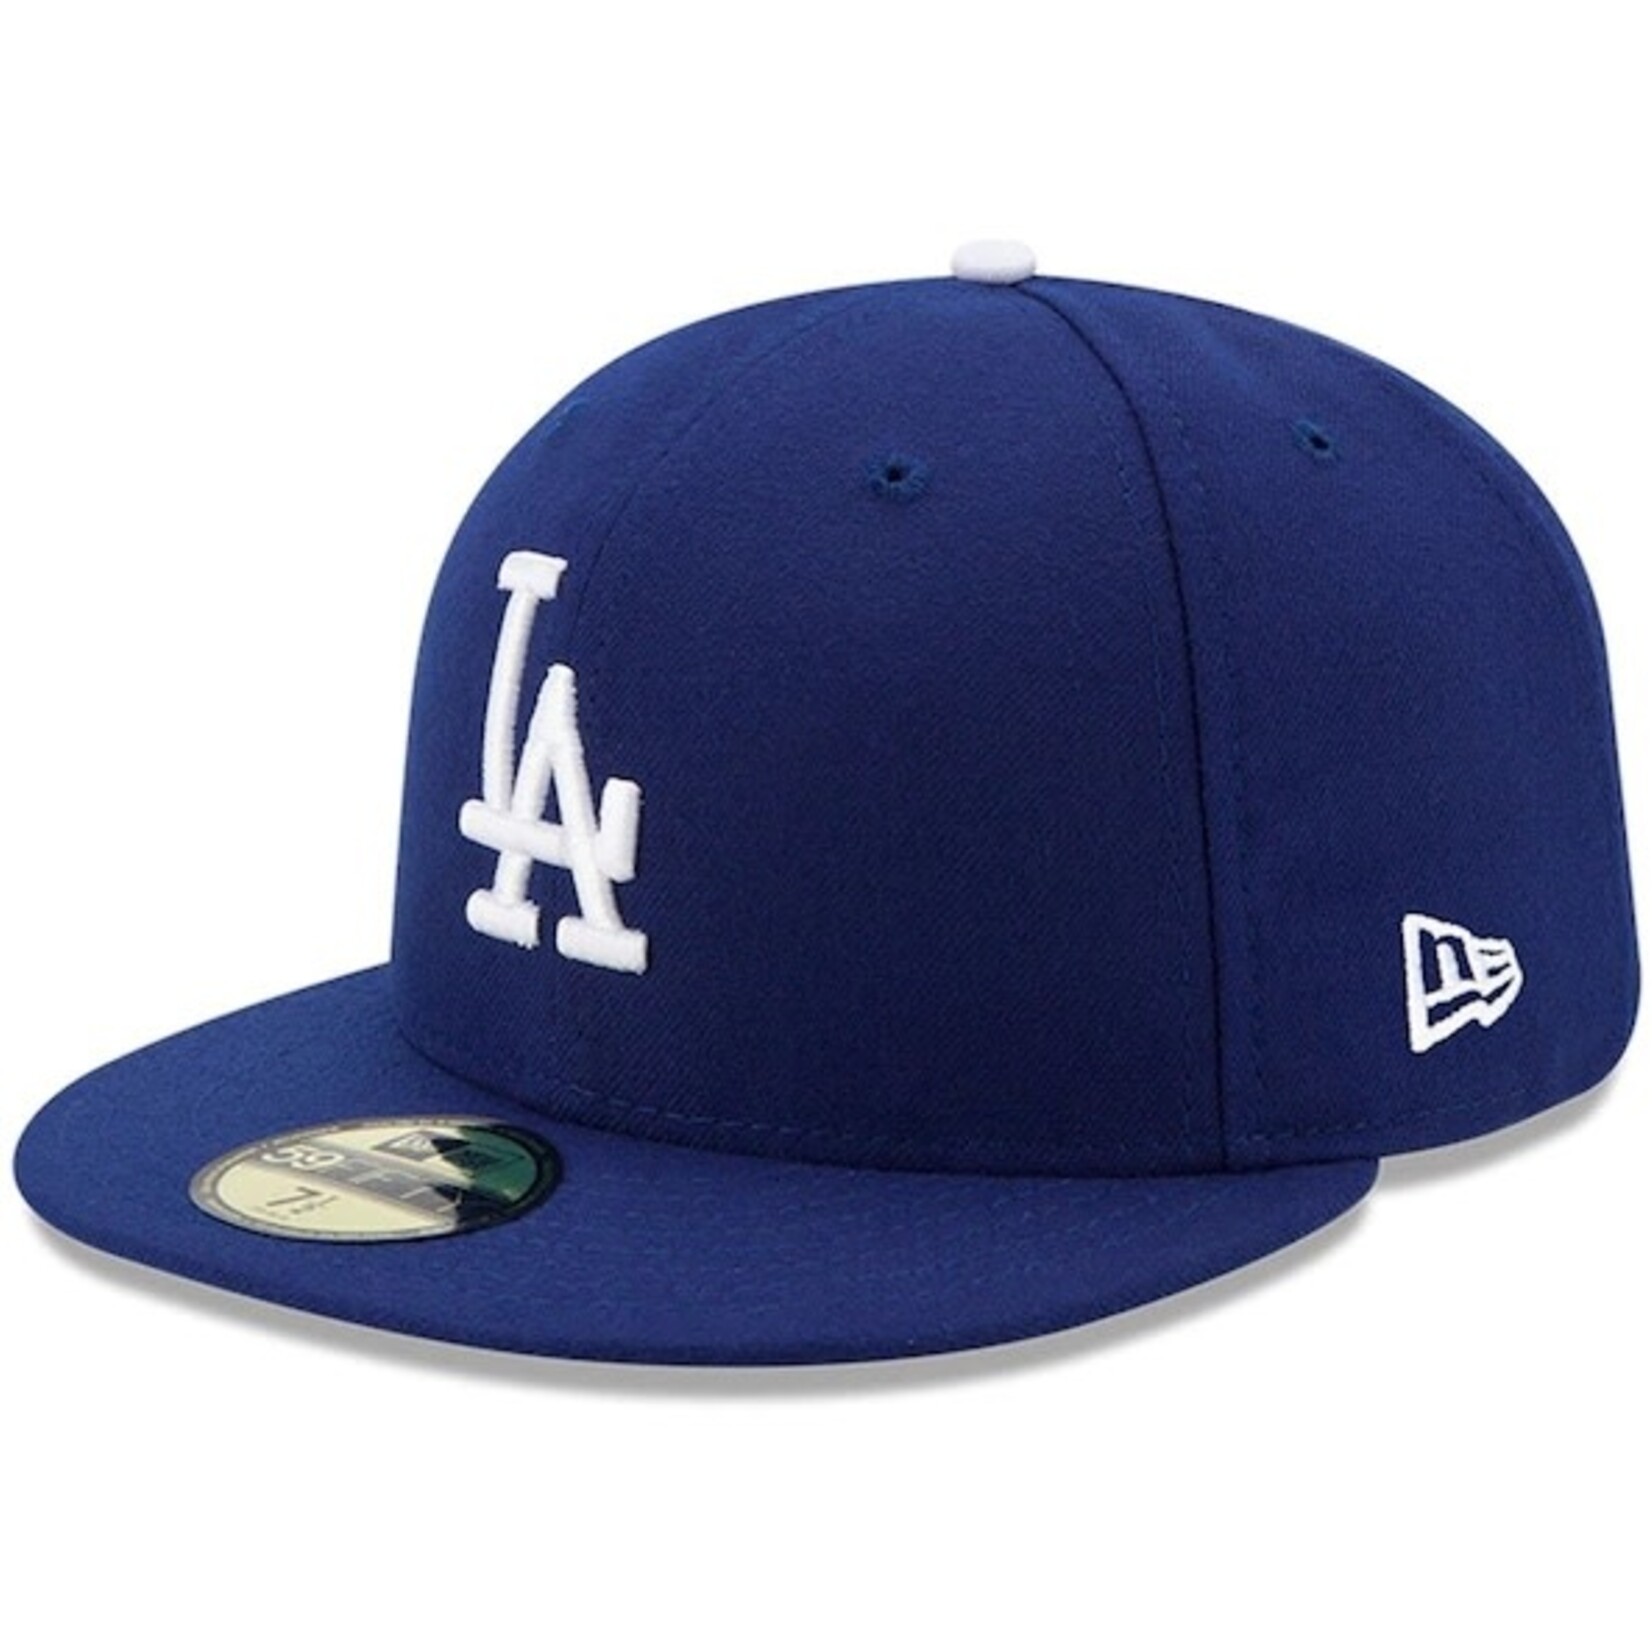 New Era New Era Hat, 5950 On-Field AC, MLB, Los Angeles Dodgers, Game